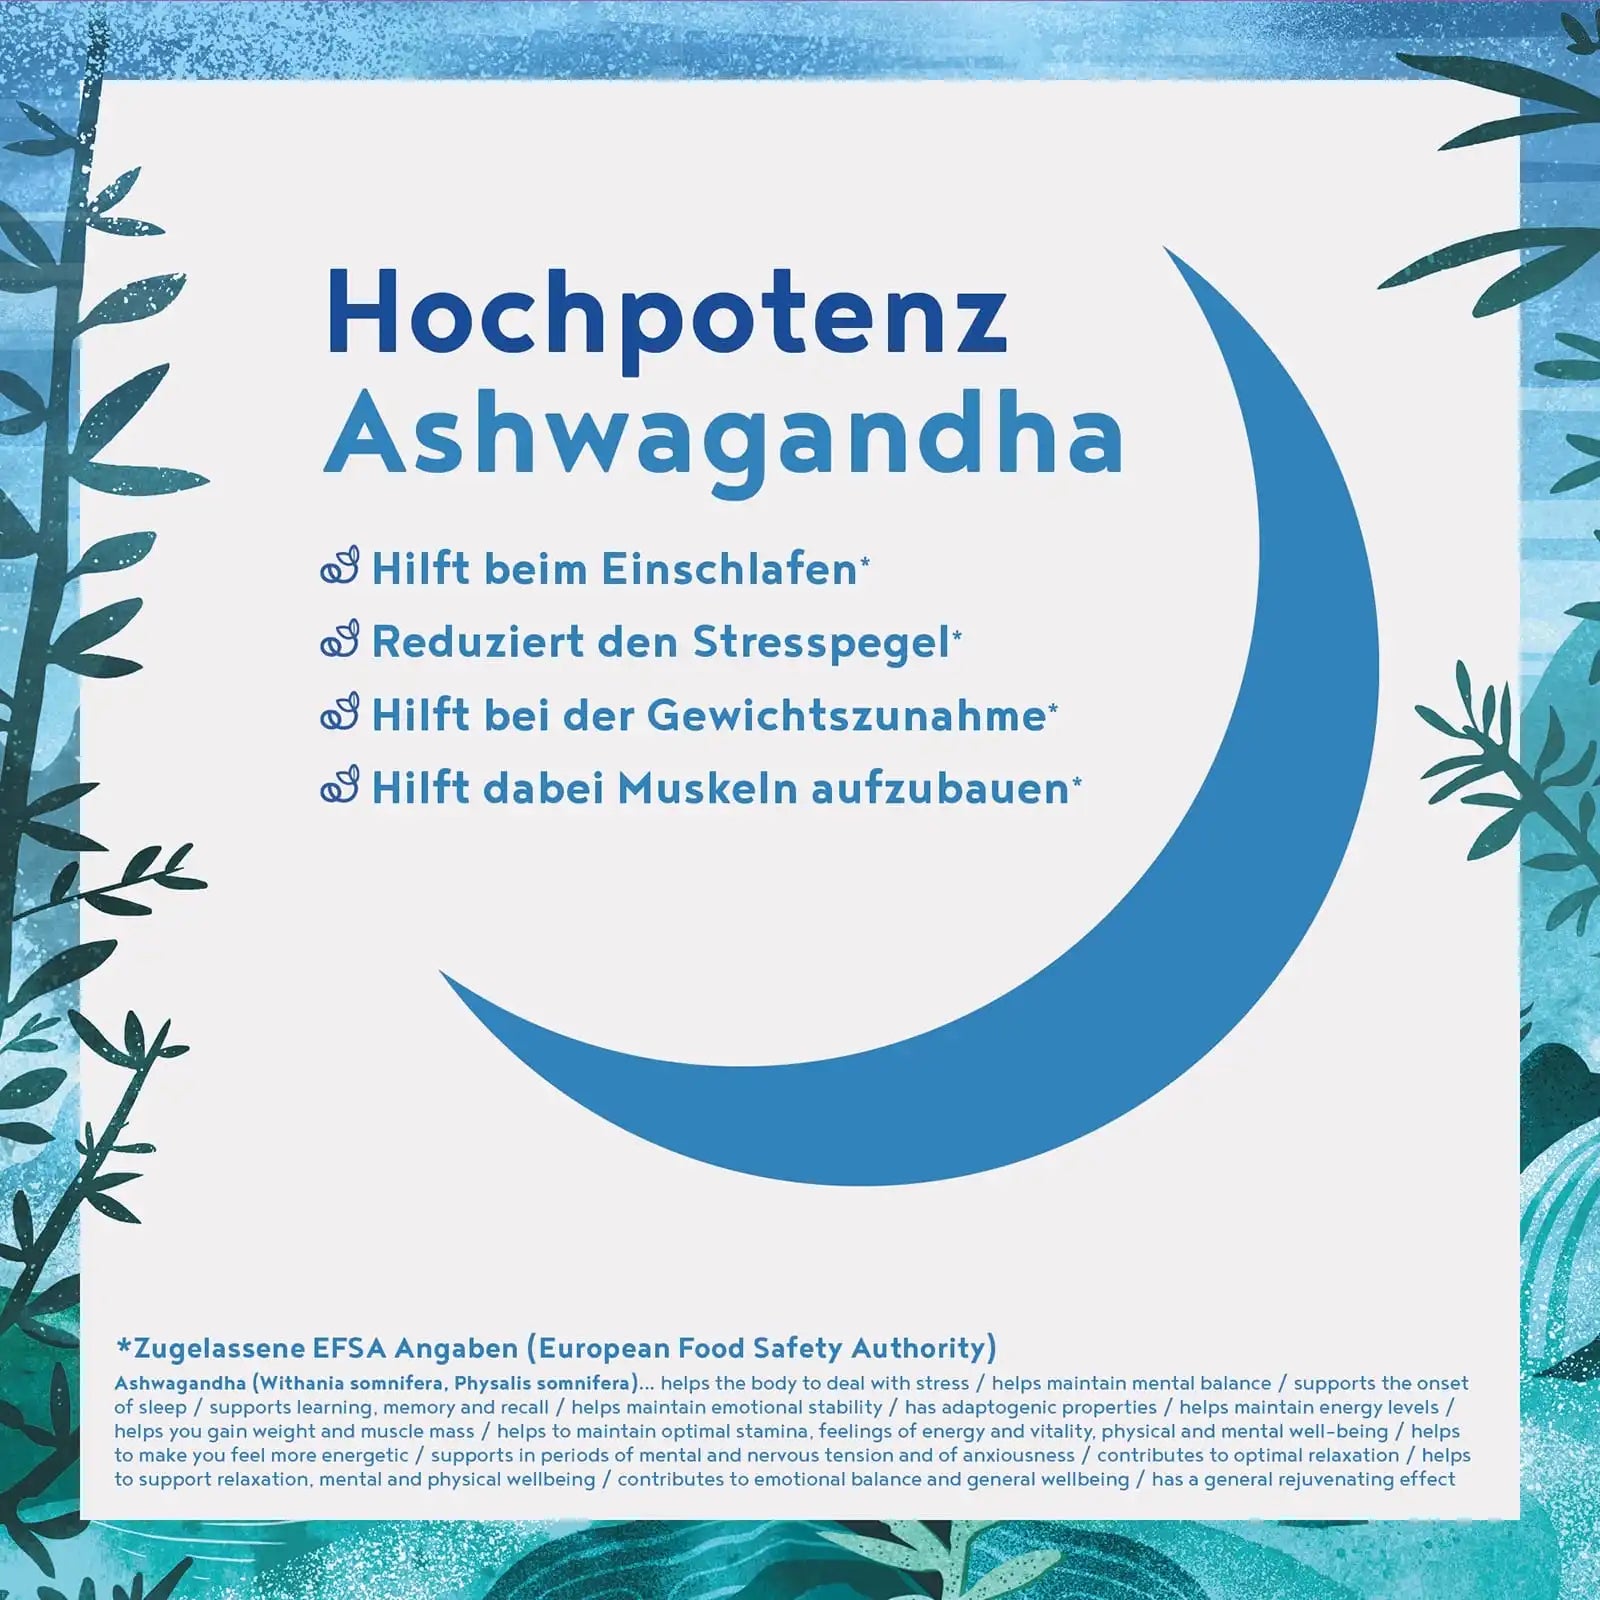 A+ One - Hochpotenz Ashwagandha